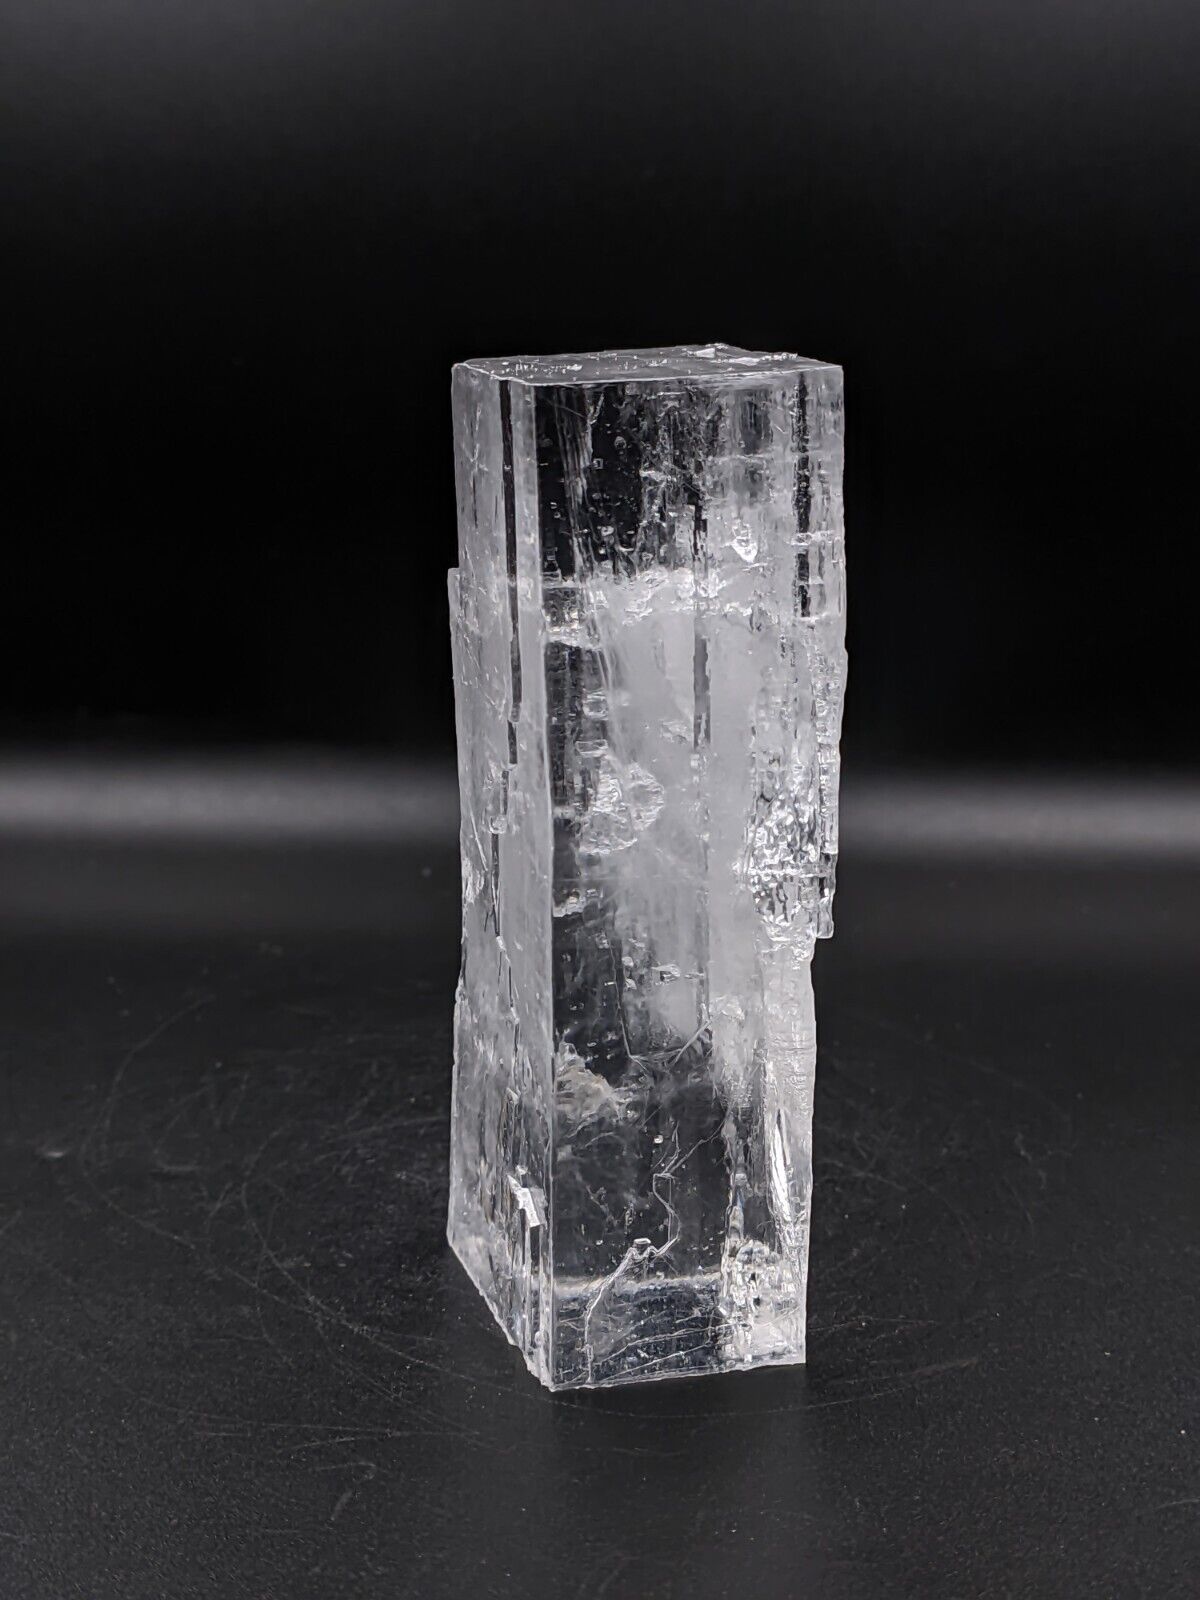 Halite crystal with water inside, enhydro halite 228 g. - Bakhmut field, Ukraine